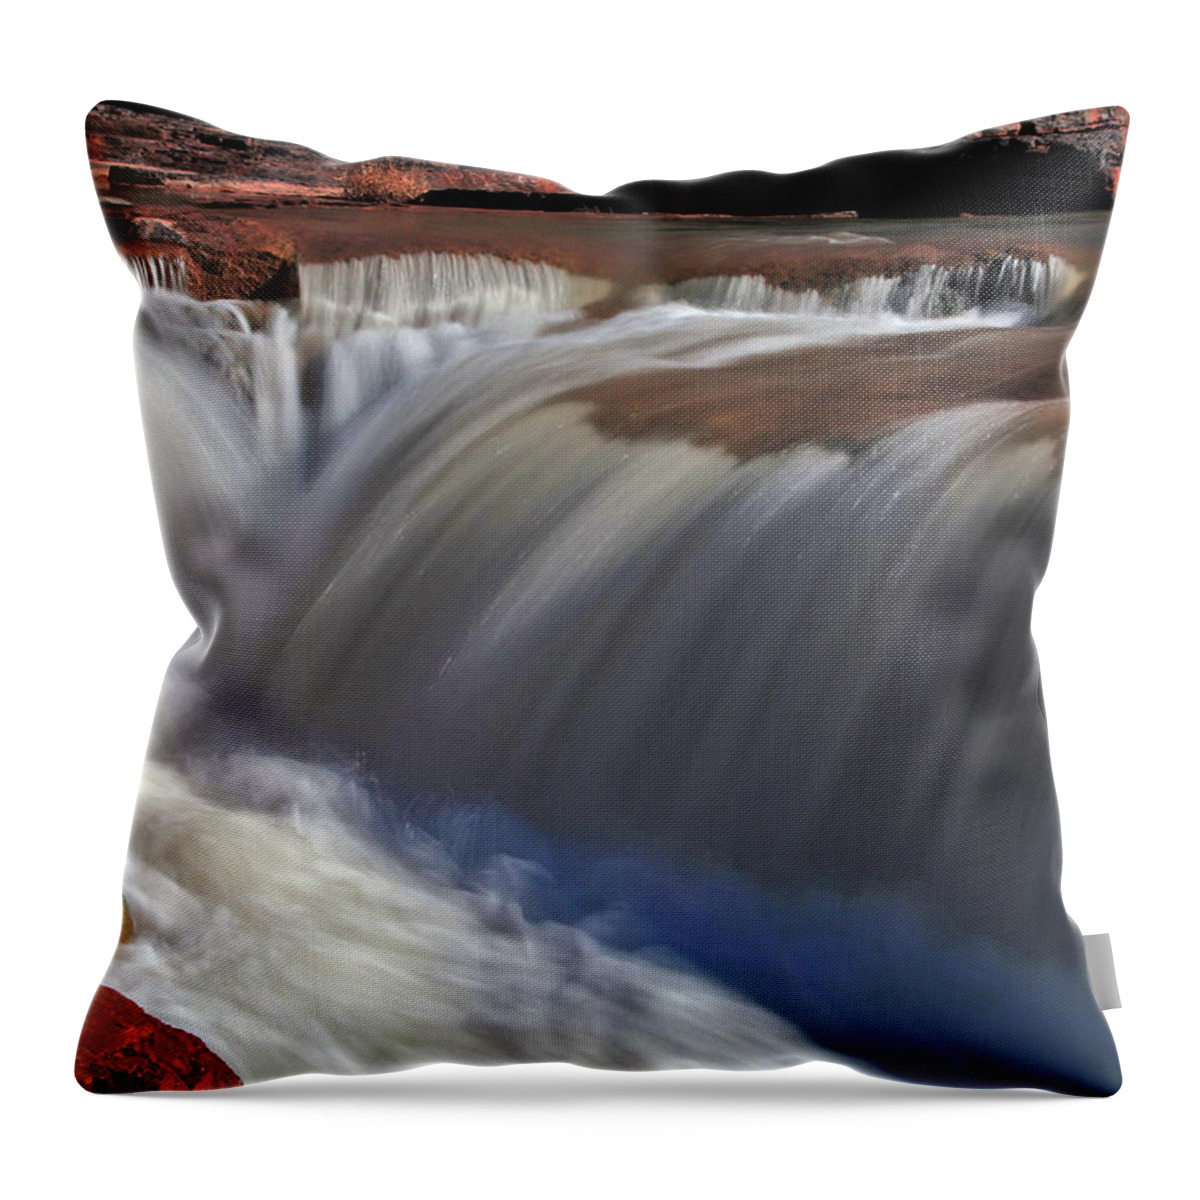 Arizona Throw Pillow featuring the photograph Silken Flow by Gary Kaylor